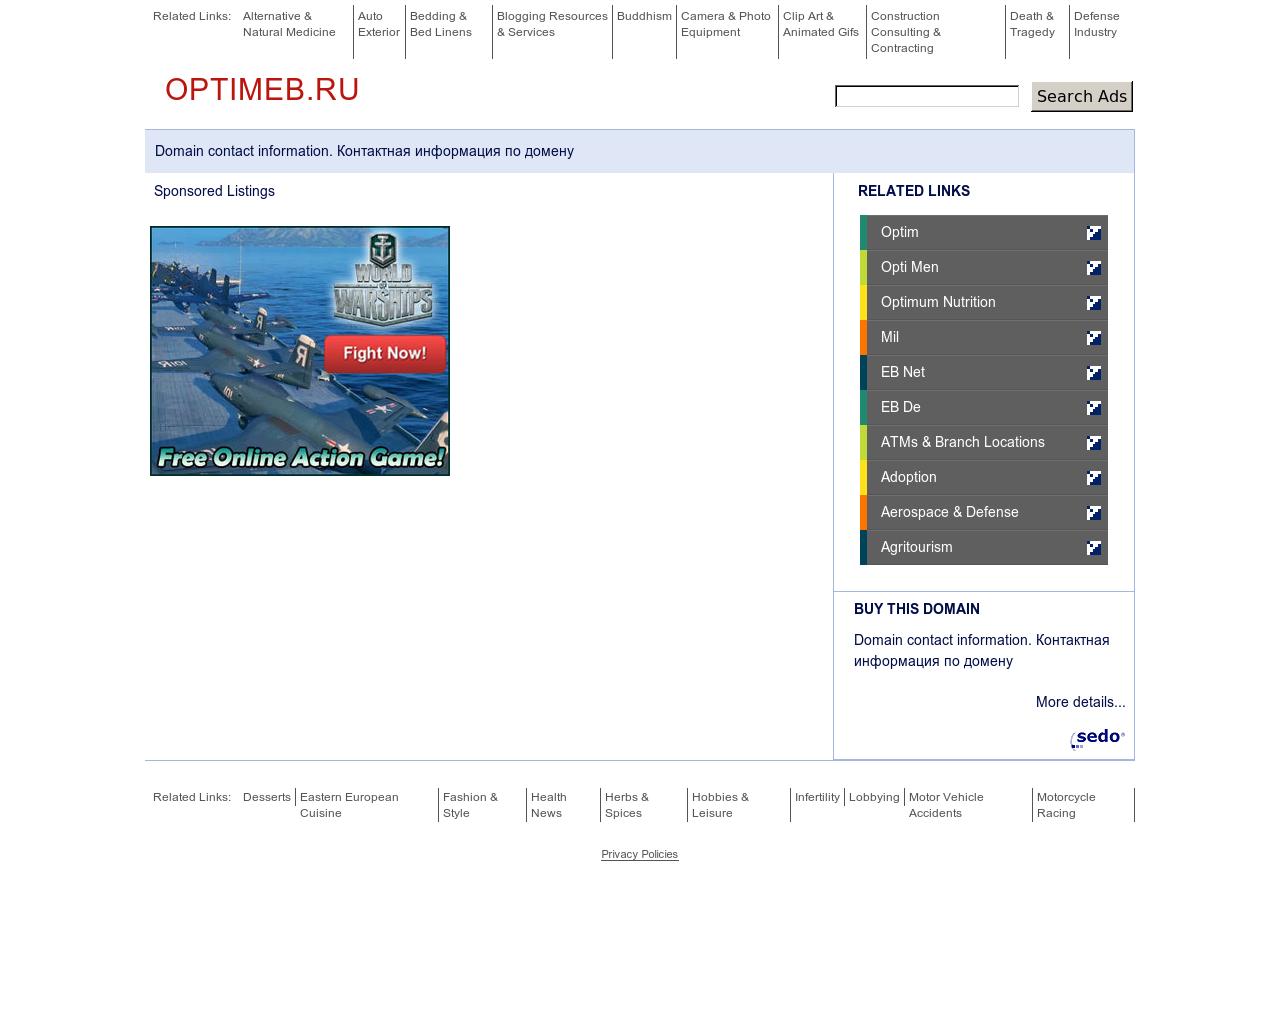 Изображение сайта optimeb.ru в разрешении 1280x1024